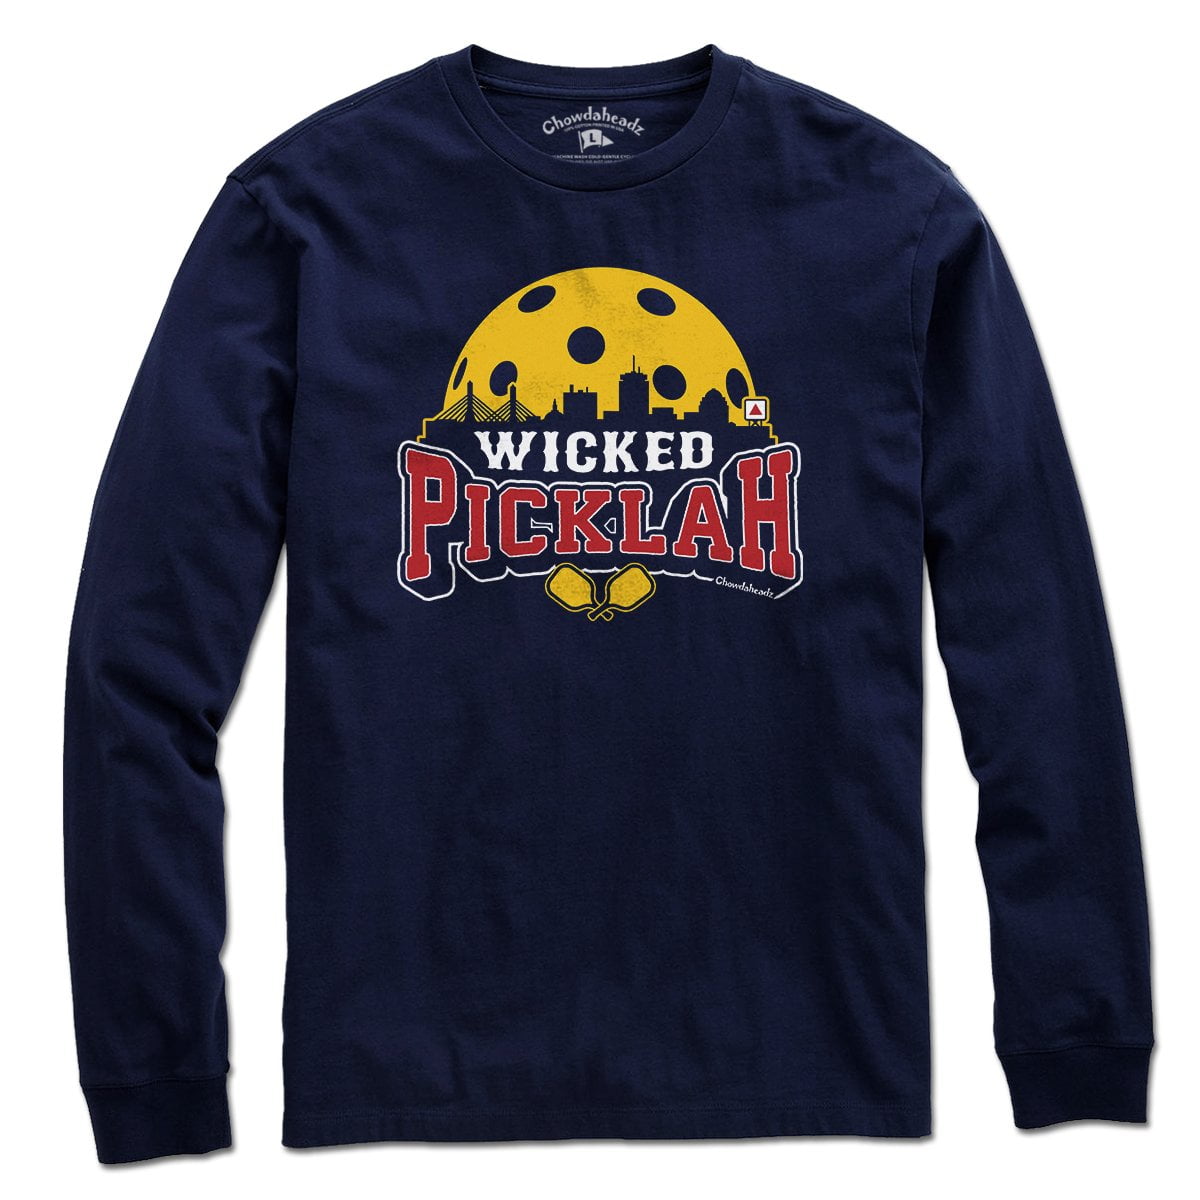 Wicked Picklah Boston Pickleball T-Shirt - Chowdaheadz